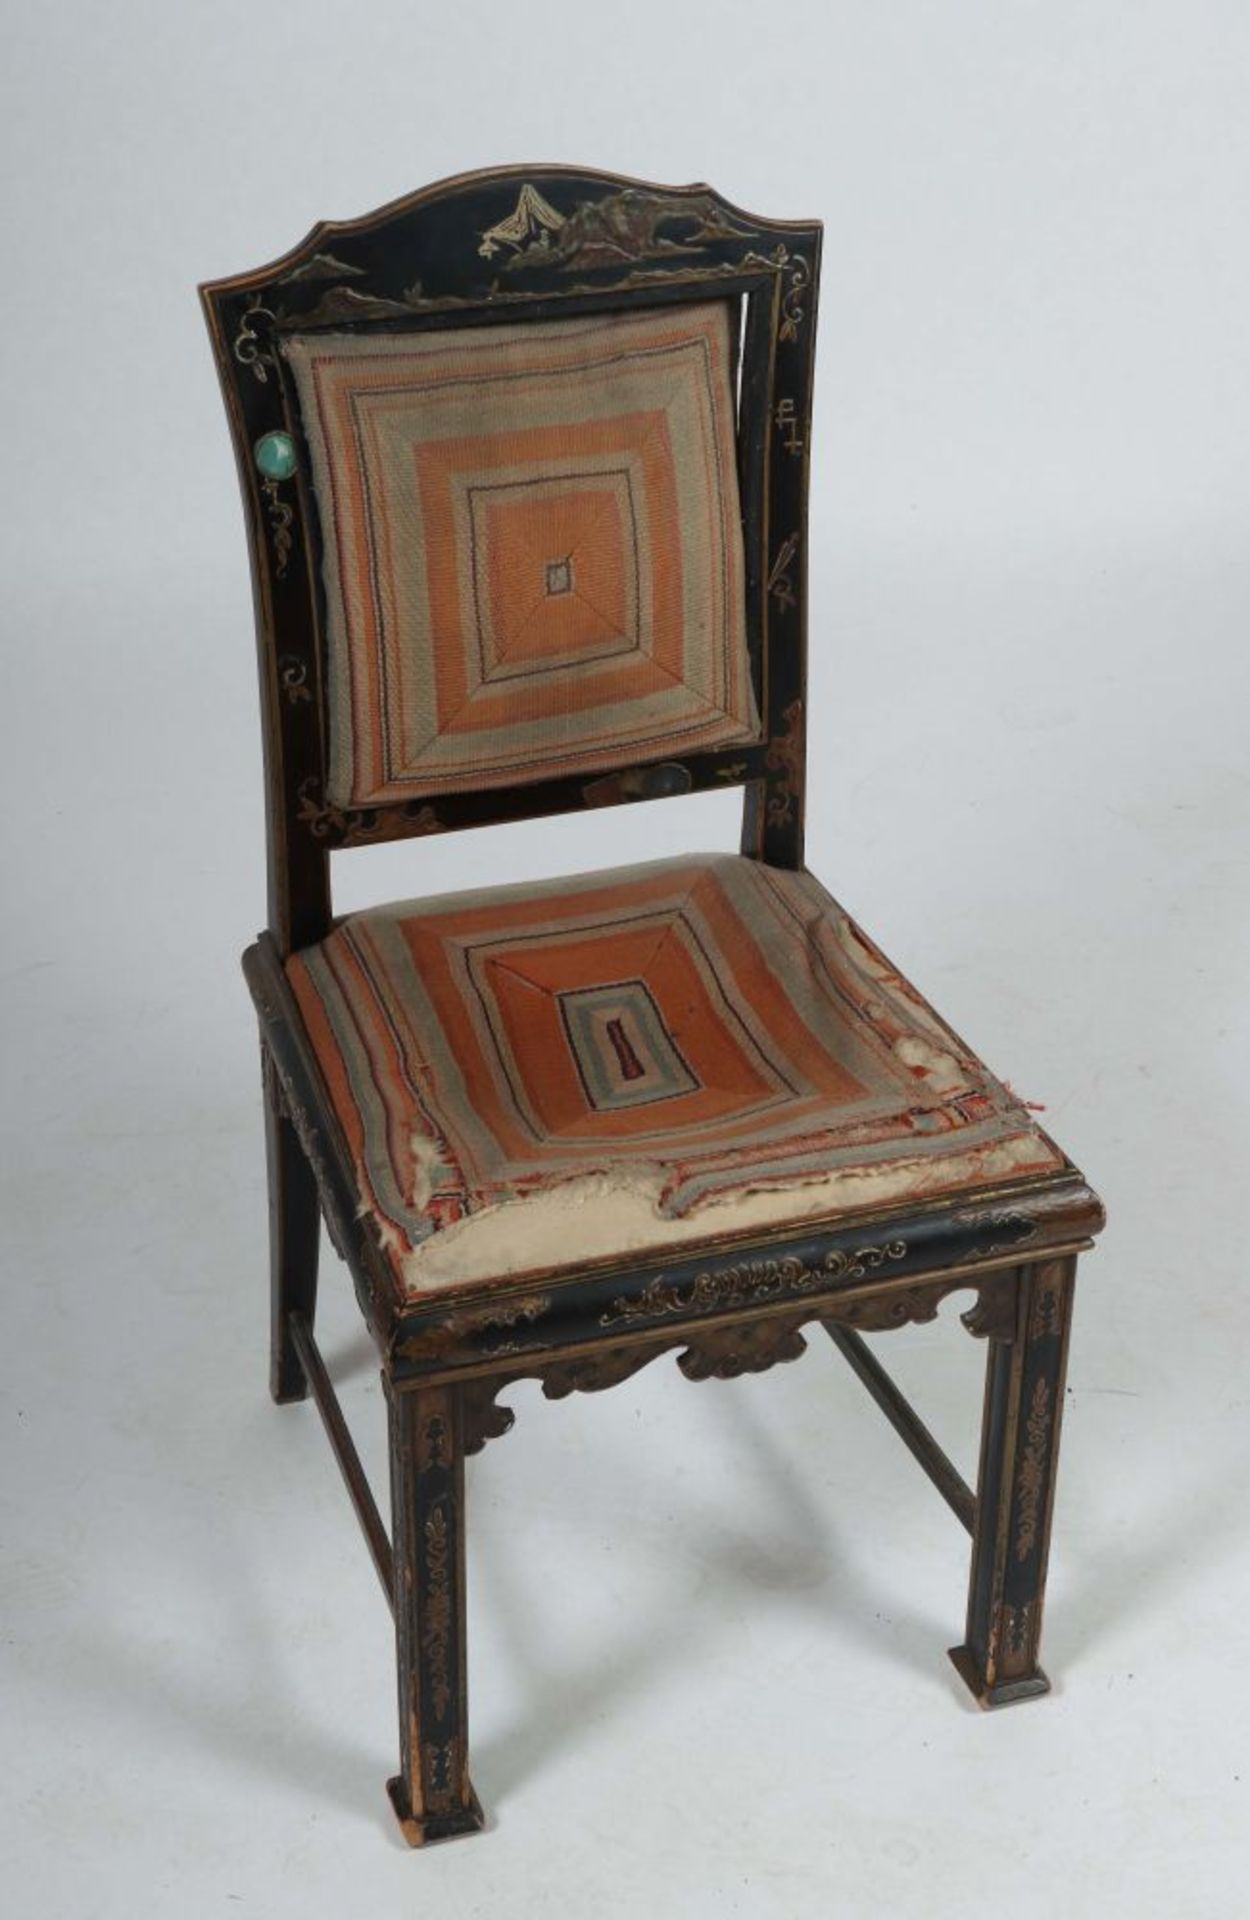 Chinoiserie-Stuhl um 1900, Holz - Bild 2 aus 2